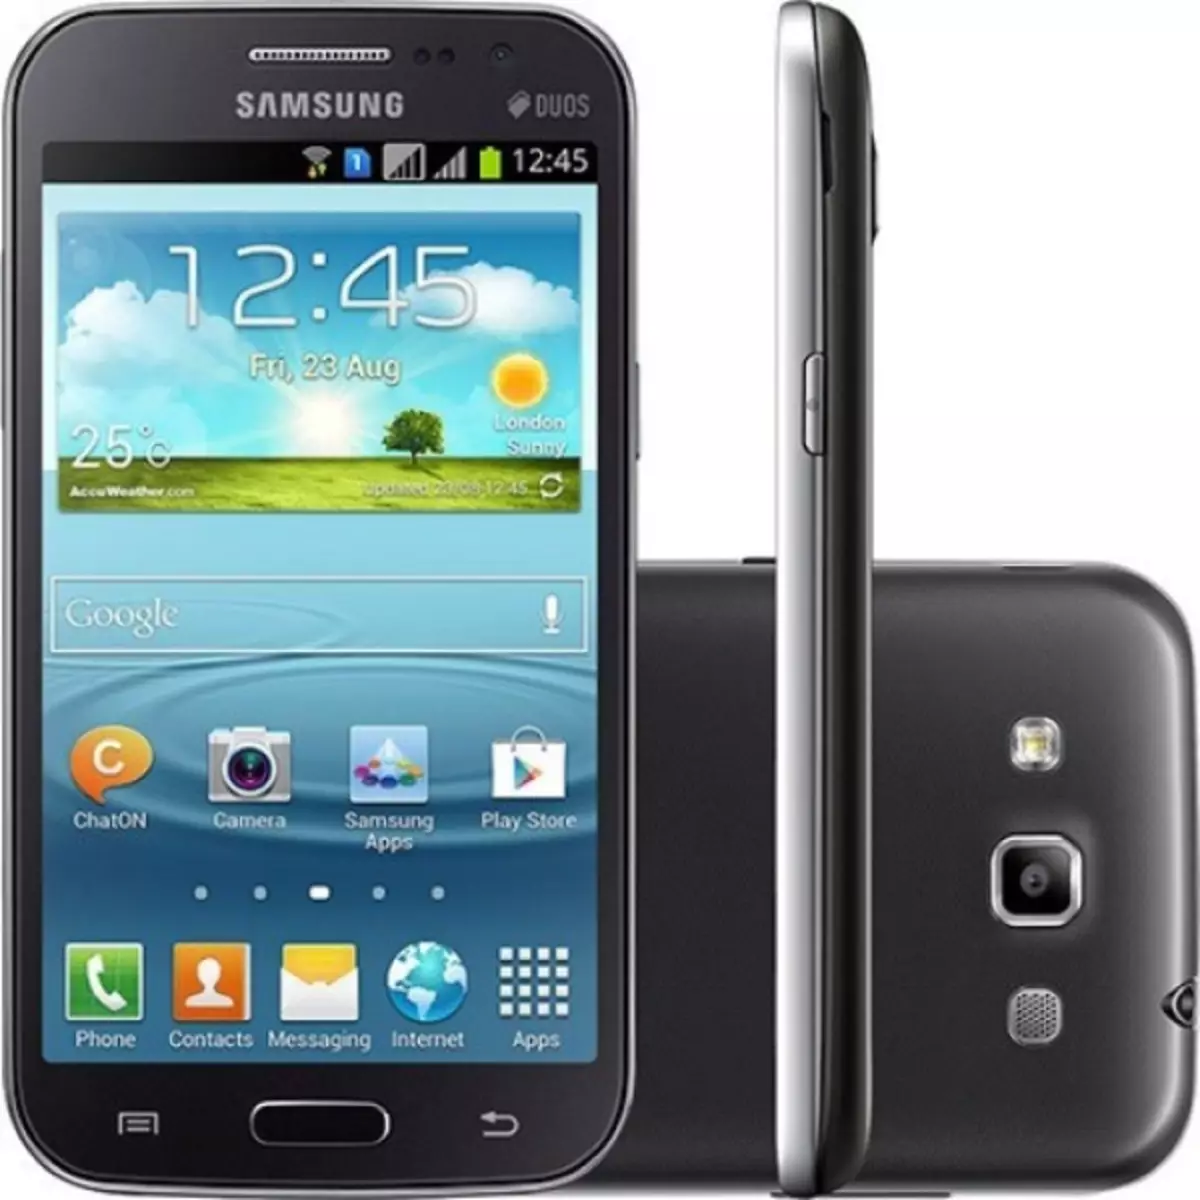 Samsung GT-I8552 Galaxy Win Duos Firmware laŭ malsamaj manieroj